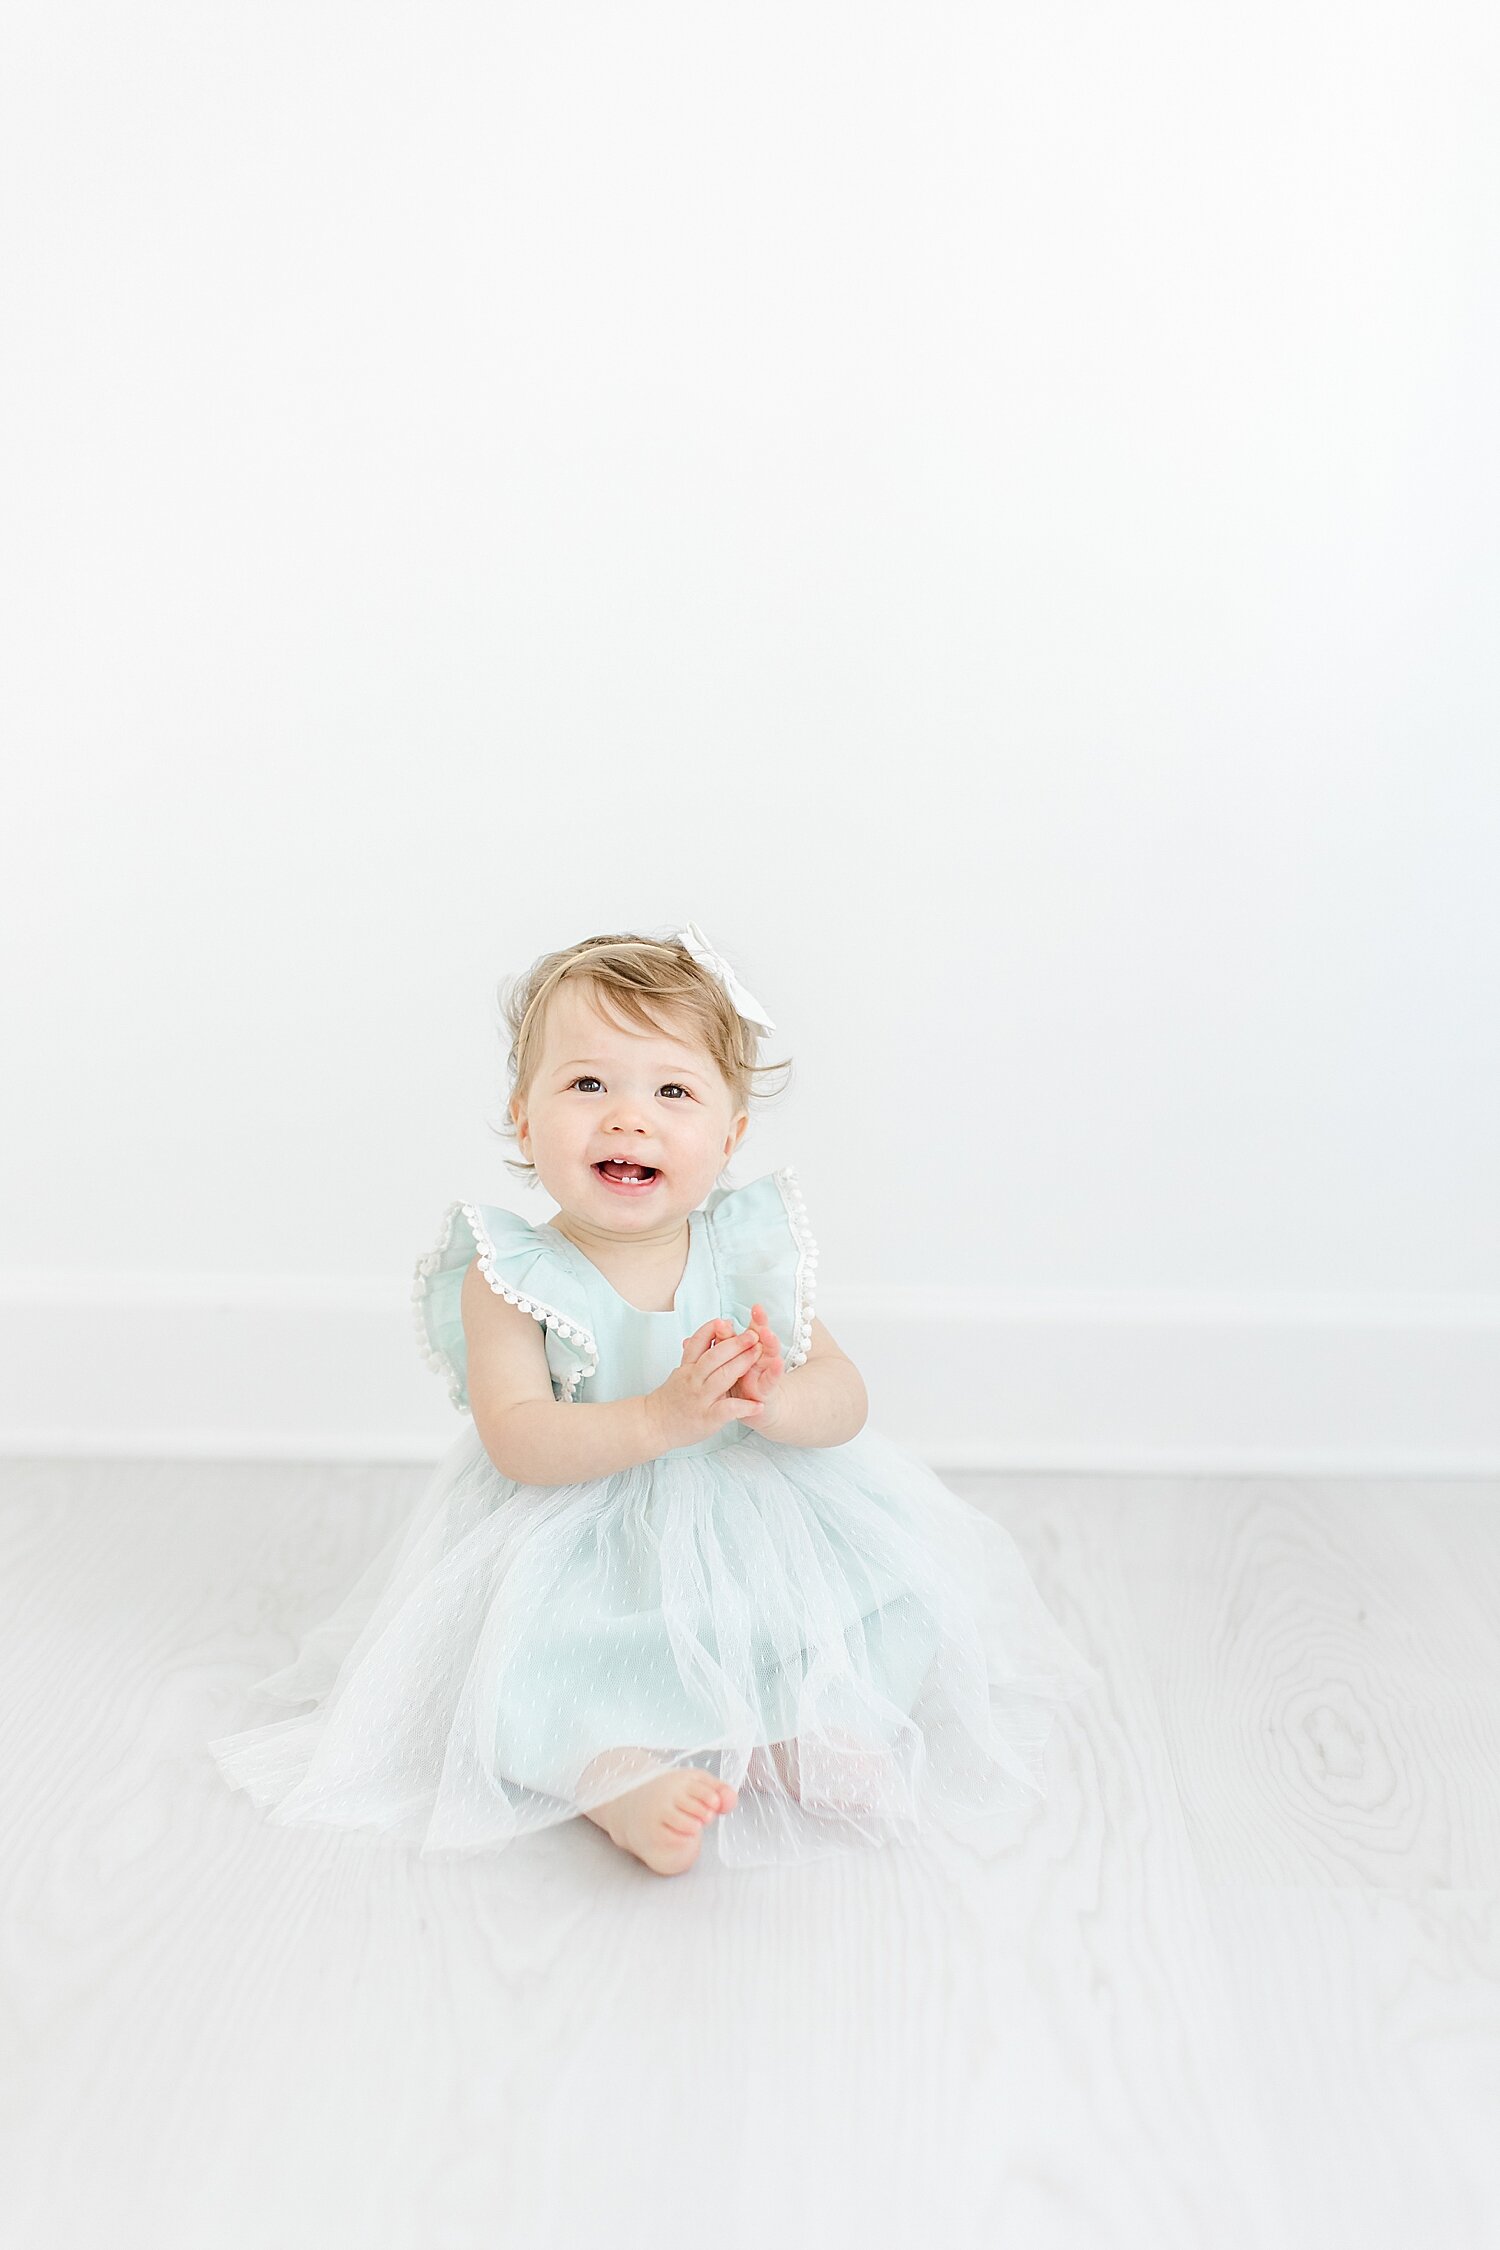 Birthday girl in a pretty dress | Kristin Wood Photography